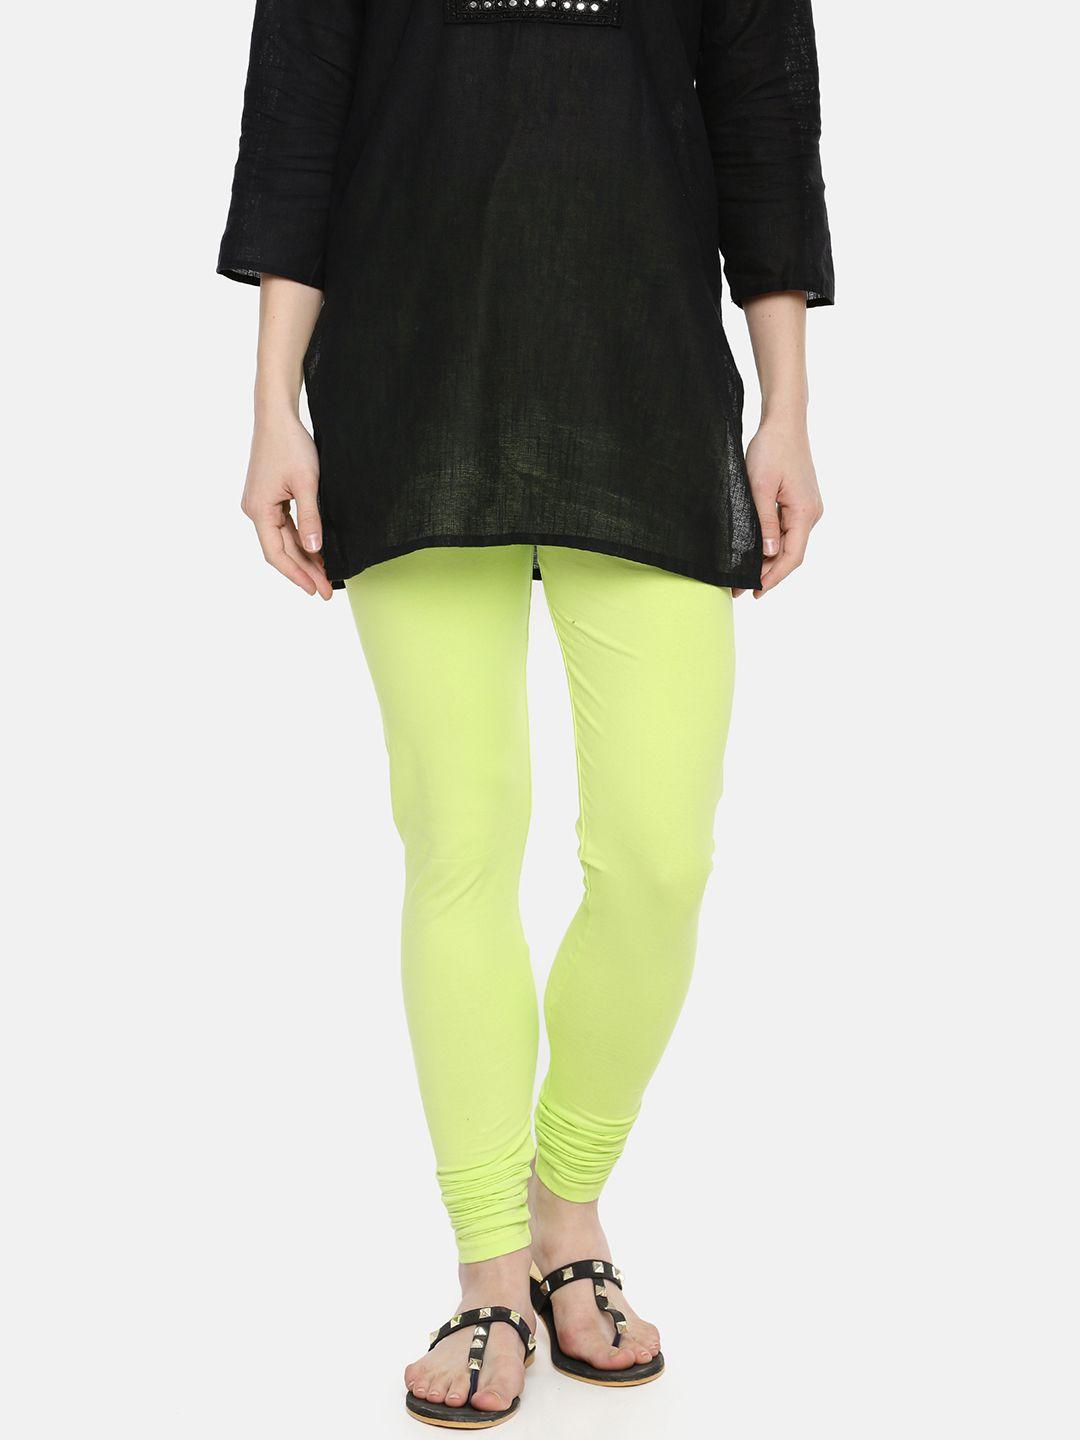 dollar missy women lime green solid churidar length leggings